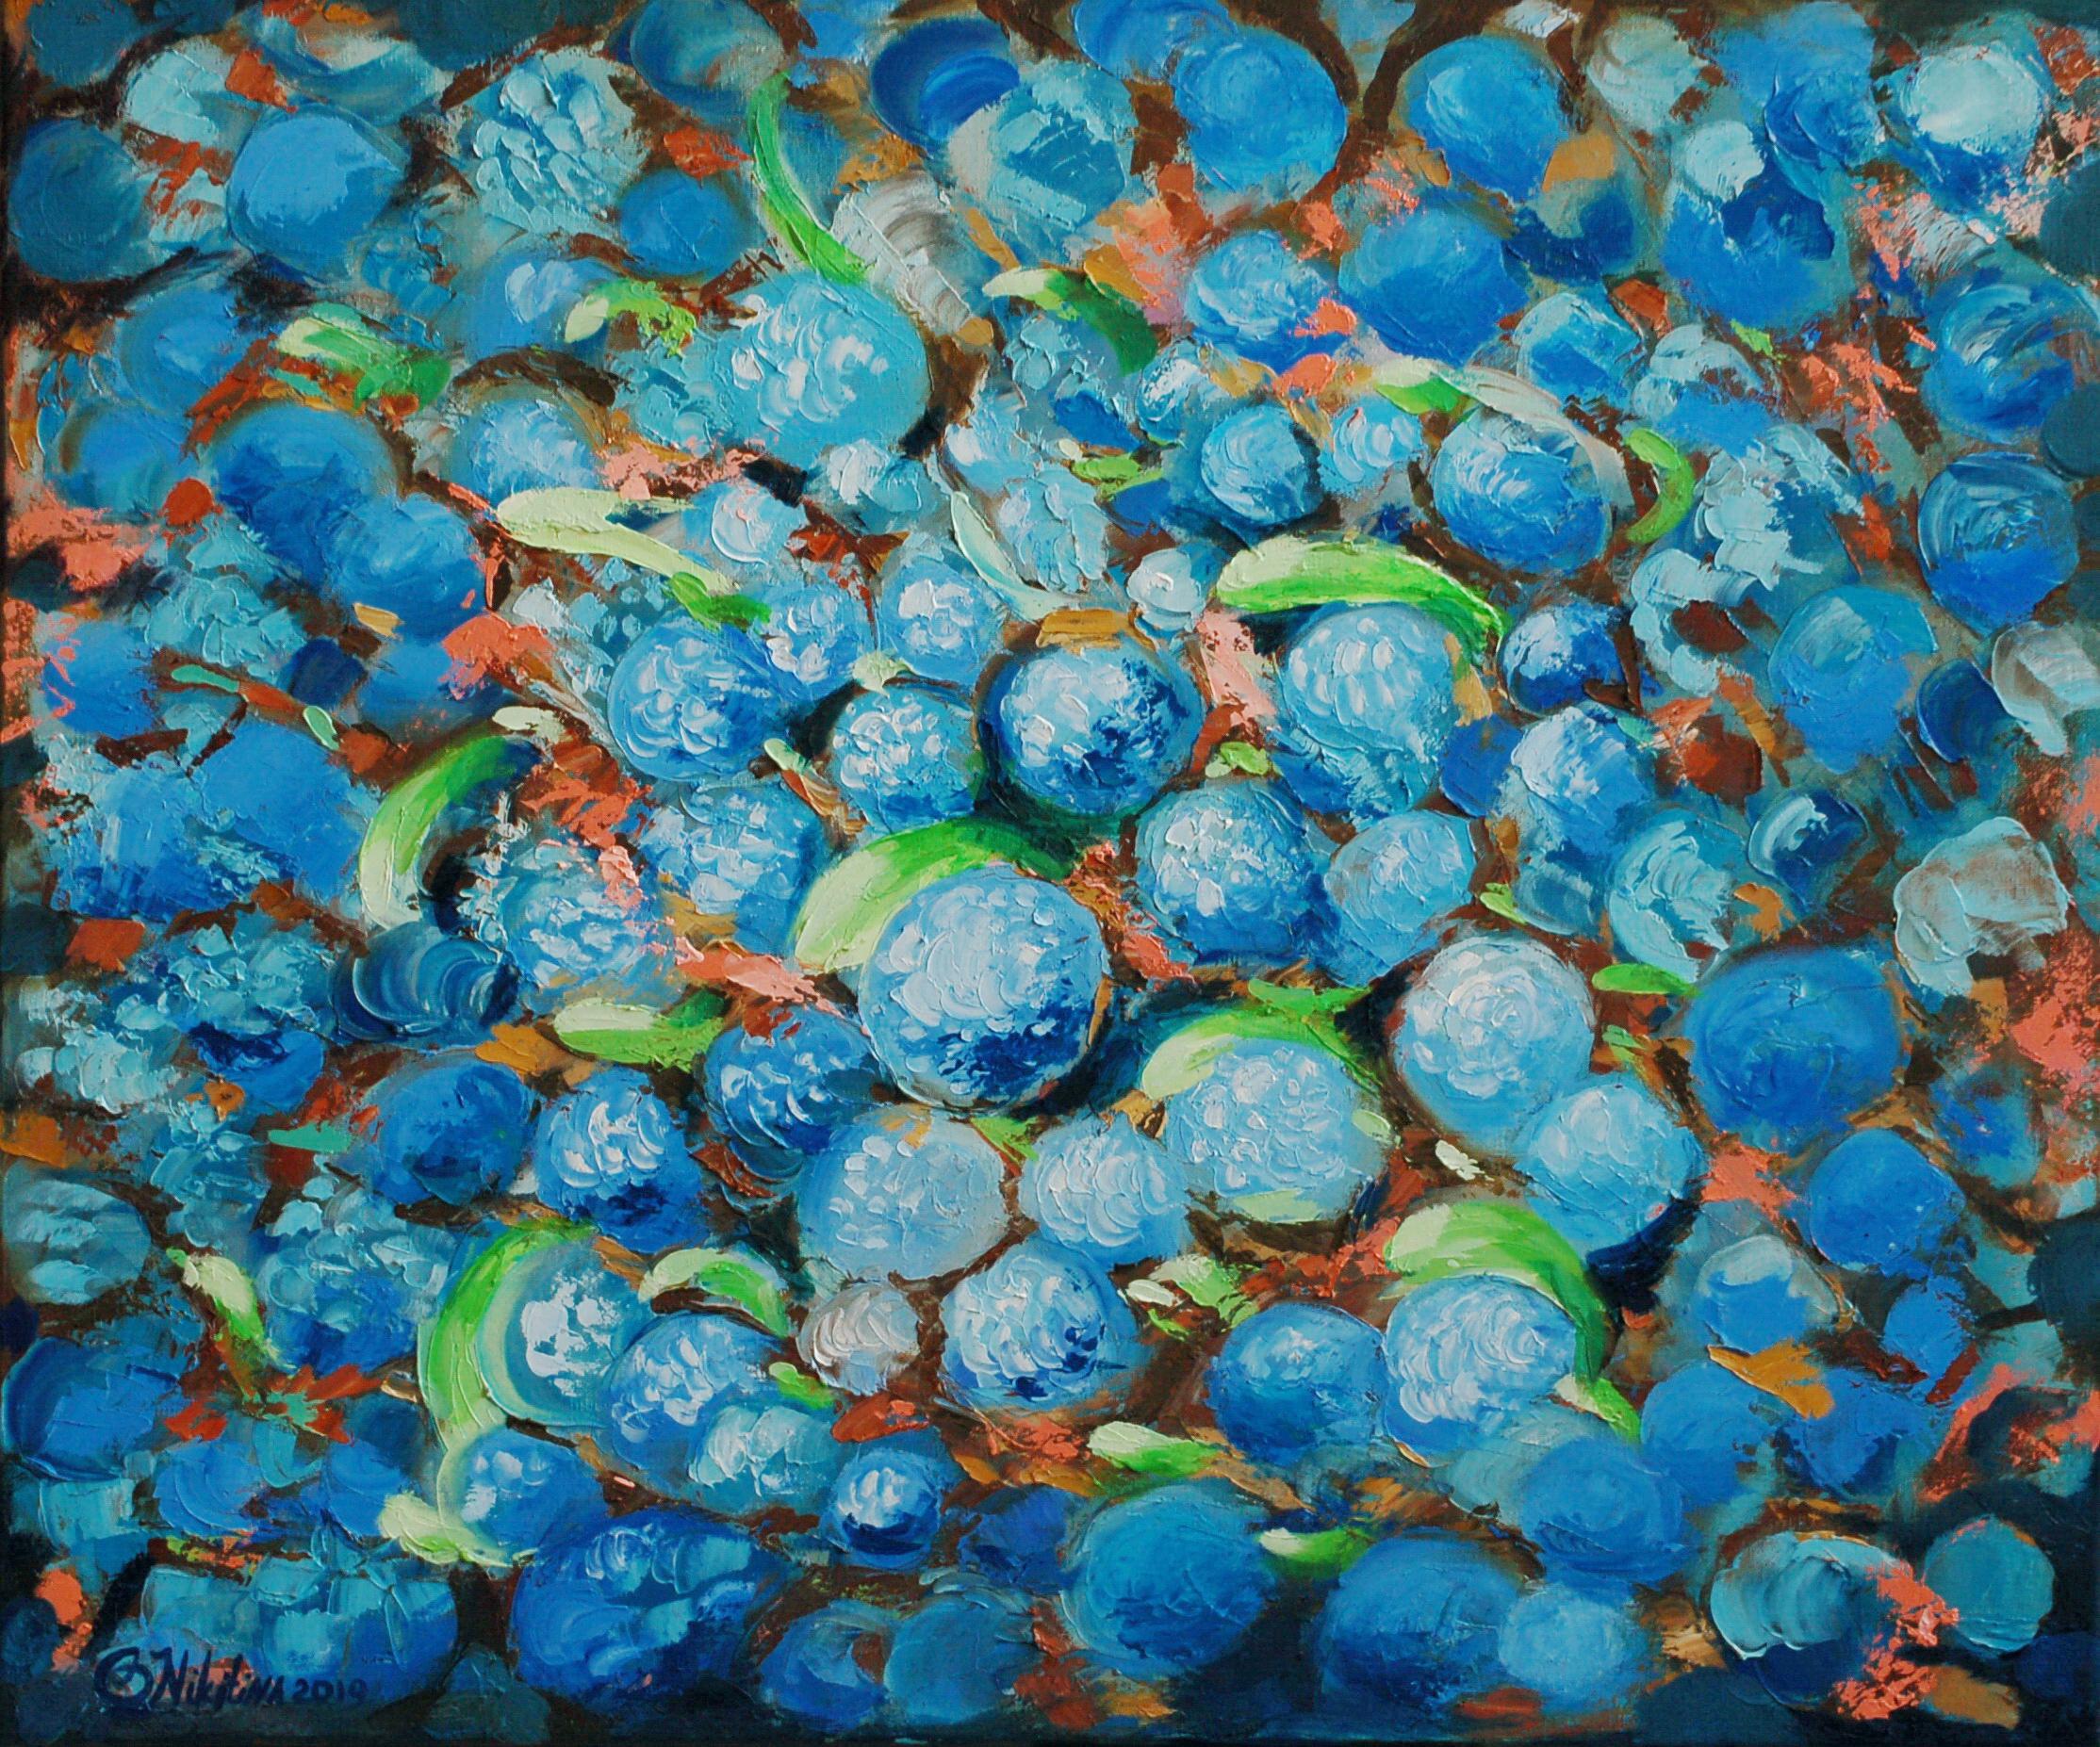 Olga Nikitina Animal Painting - Abstract Fish Painting Underwater Original Art Fish Artwork Sea Life Painting